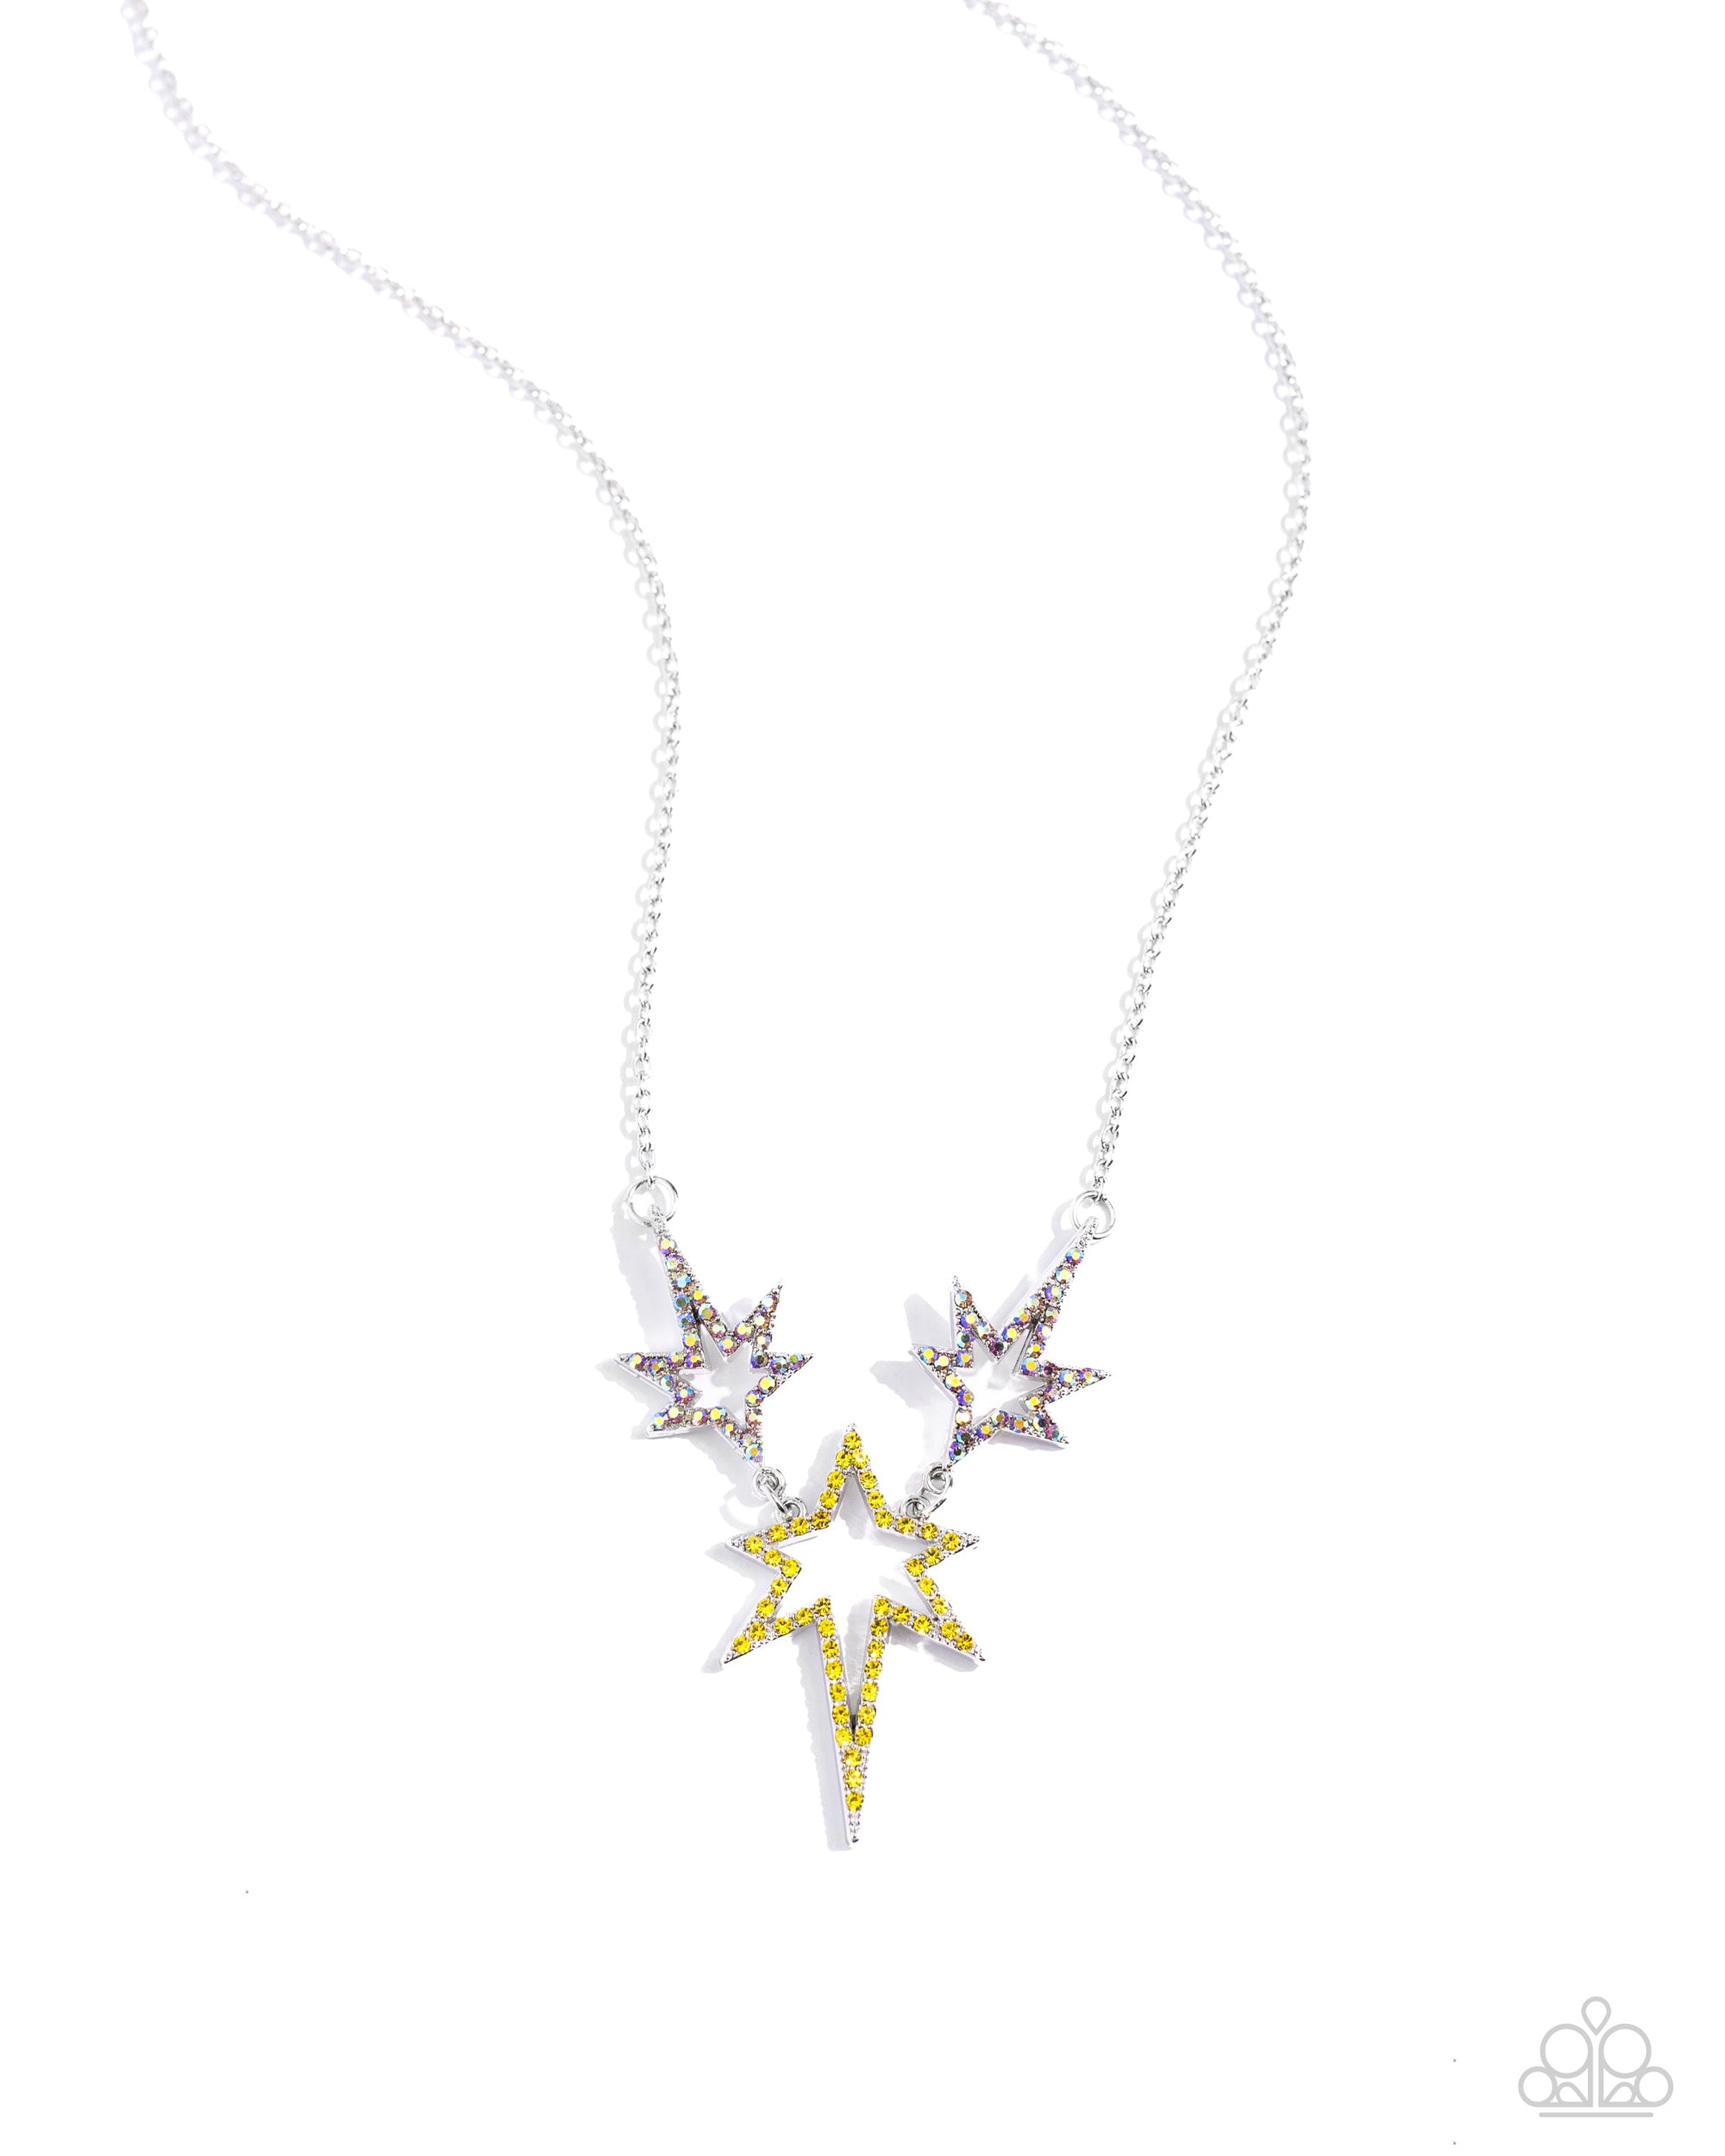 Explosive Exhibit Yellow Rhinestone Star Necklace - Paparazzi Accessories- lightbox - CarasShop.com - $5 Jewelry by Cara Jewels